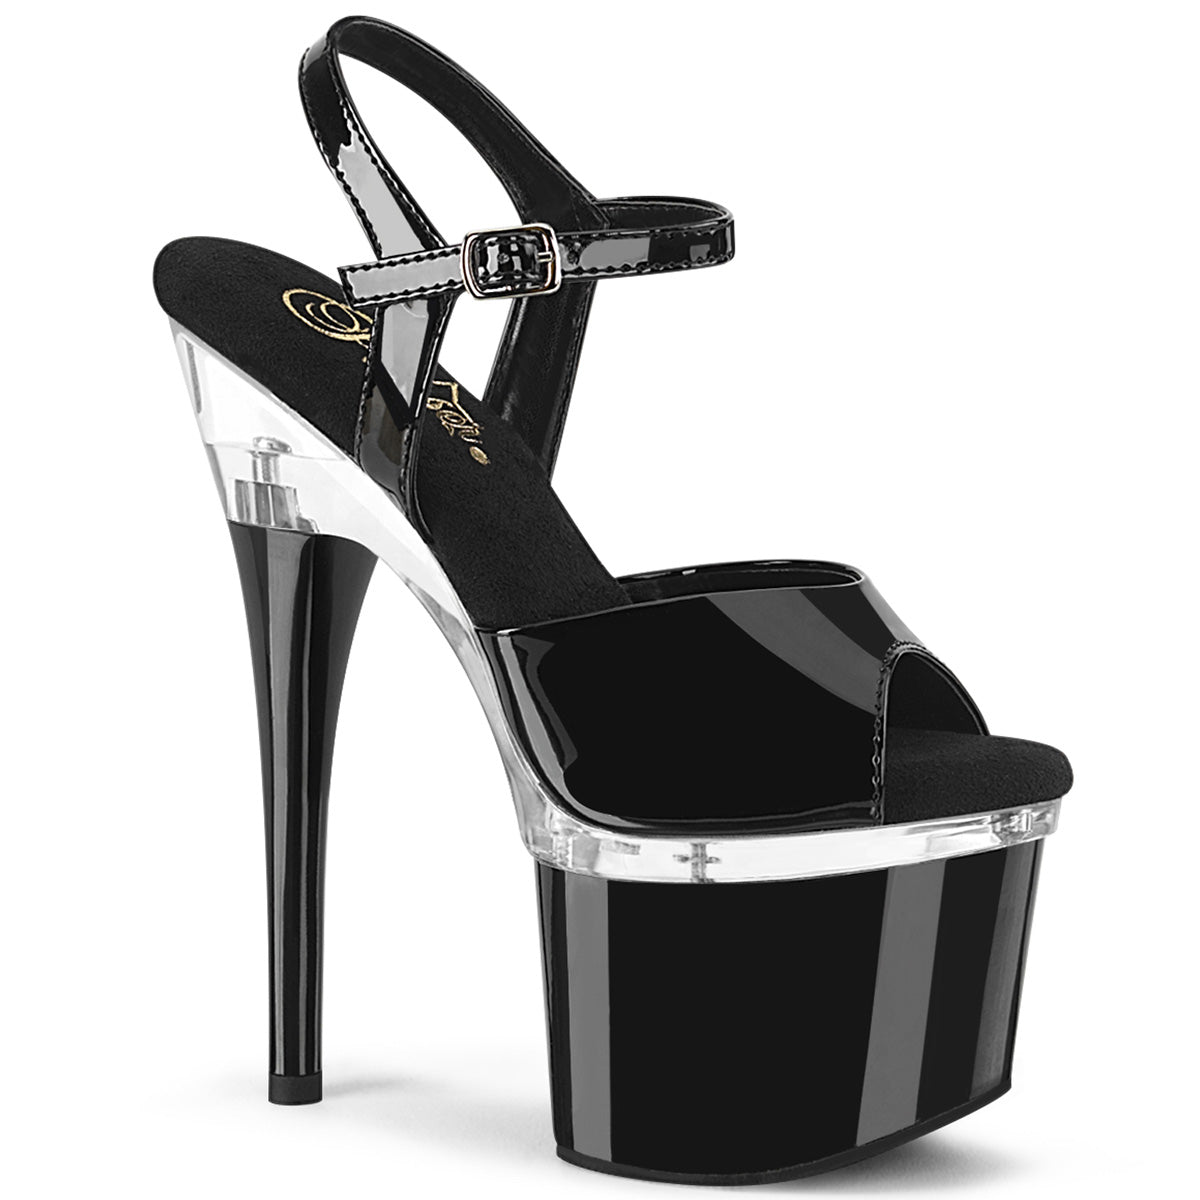 ESTEEM-709 7" Heel Black Patent Pole Dancing -Pleaser- Sexy Shoes